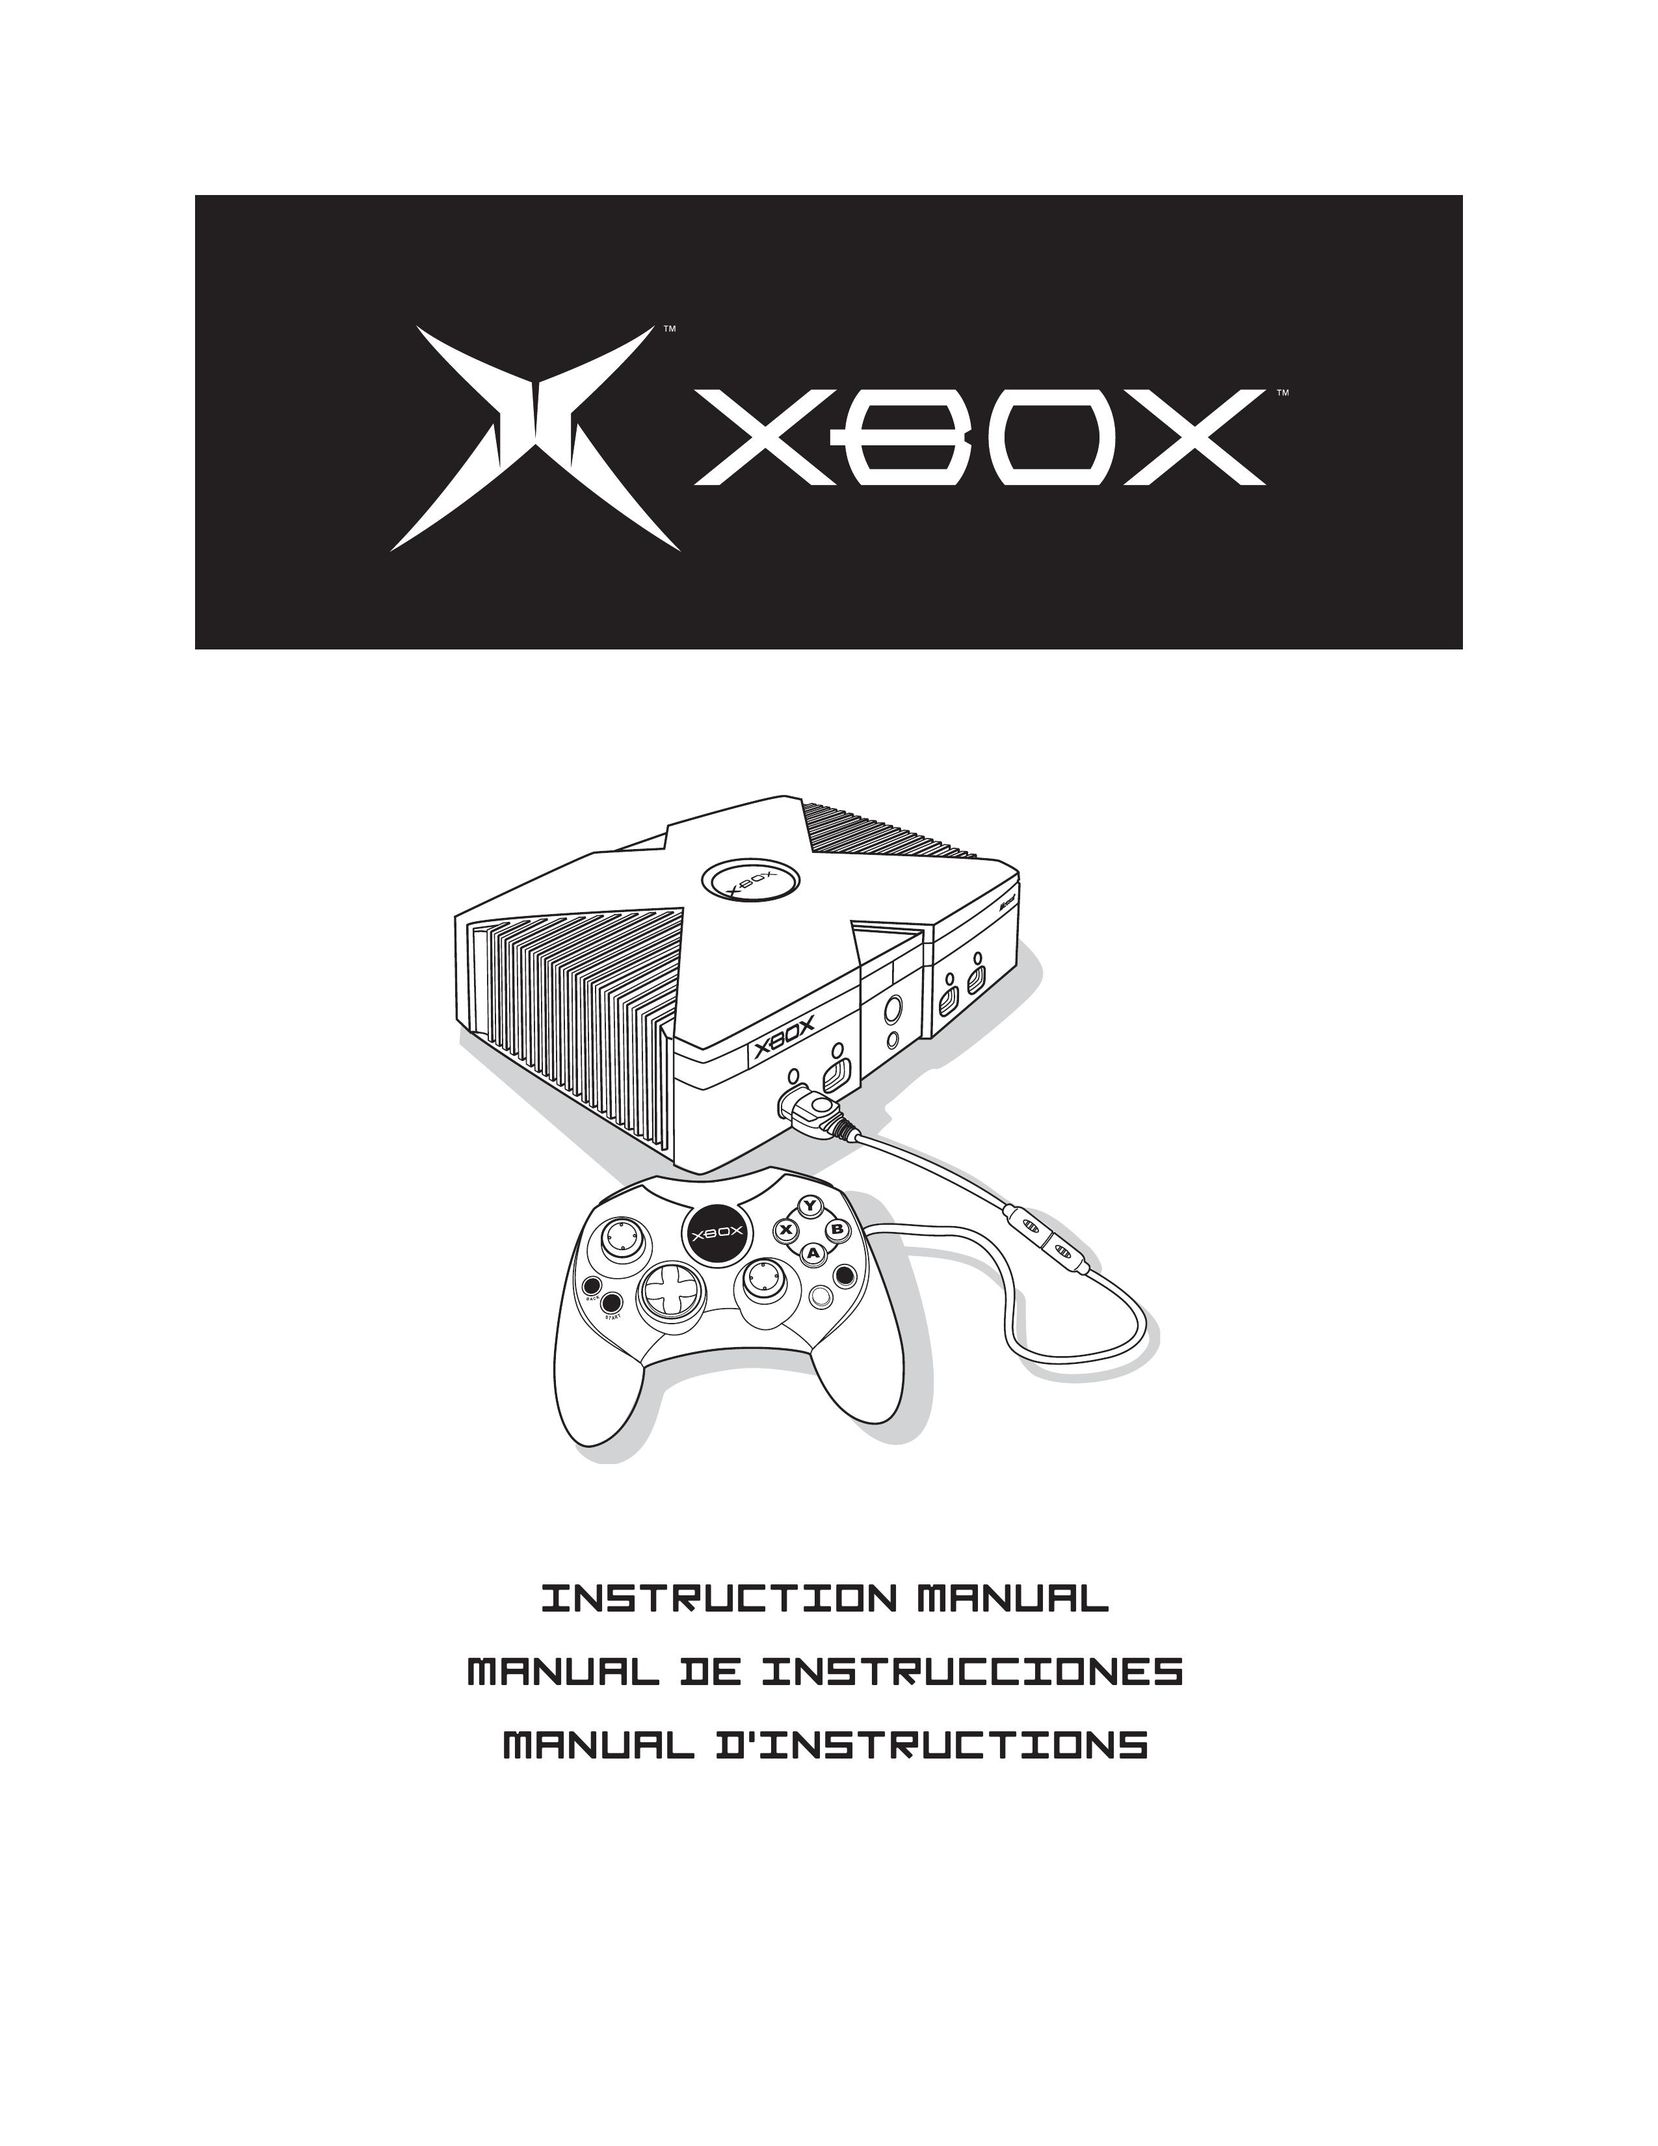 Microsoft XBOX Video Game Console User Manual